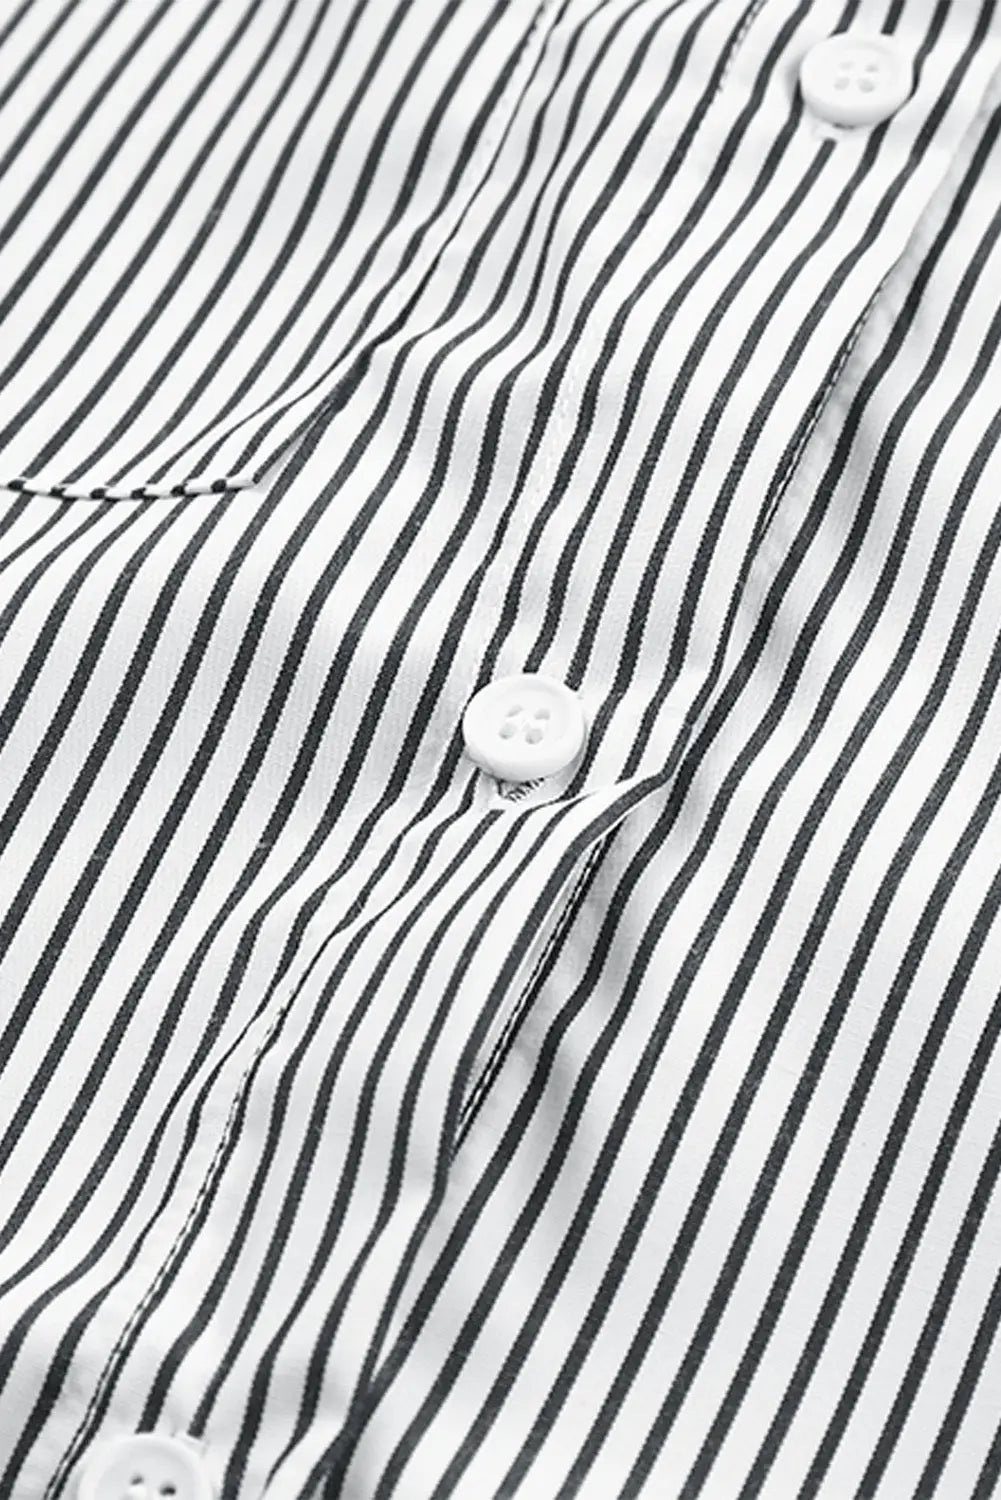 Smocked cuffed striped boyfriend shirt with pocket - tops